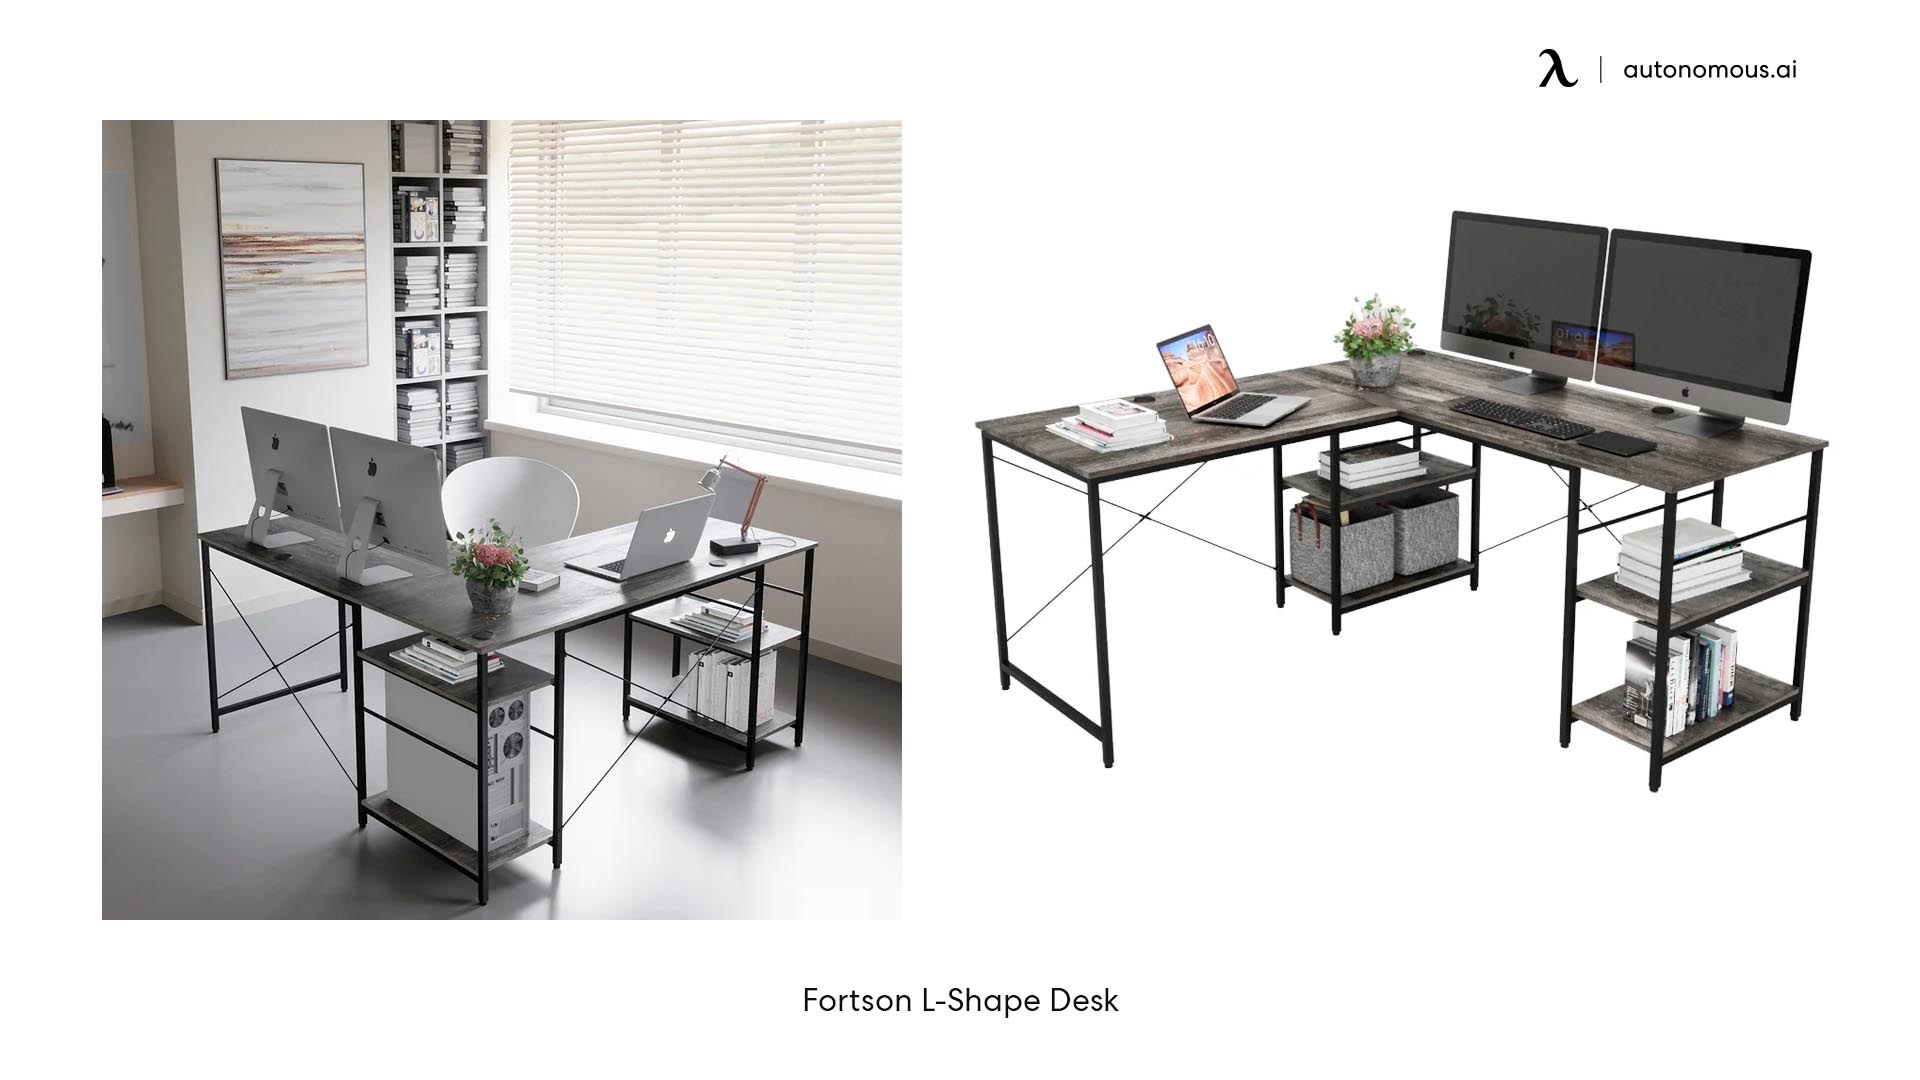 Fortson L-Shape Desk